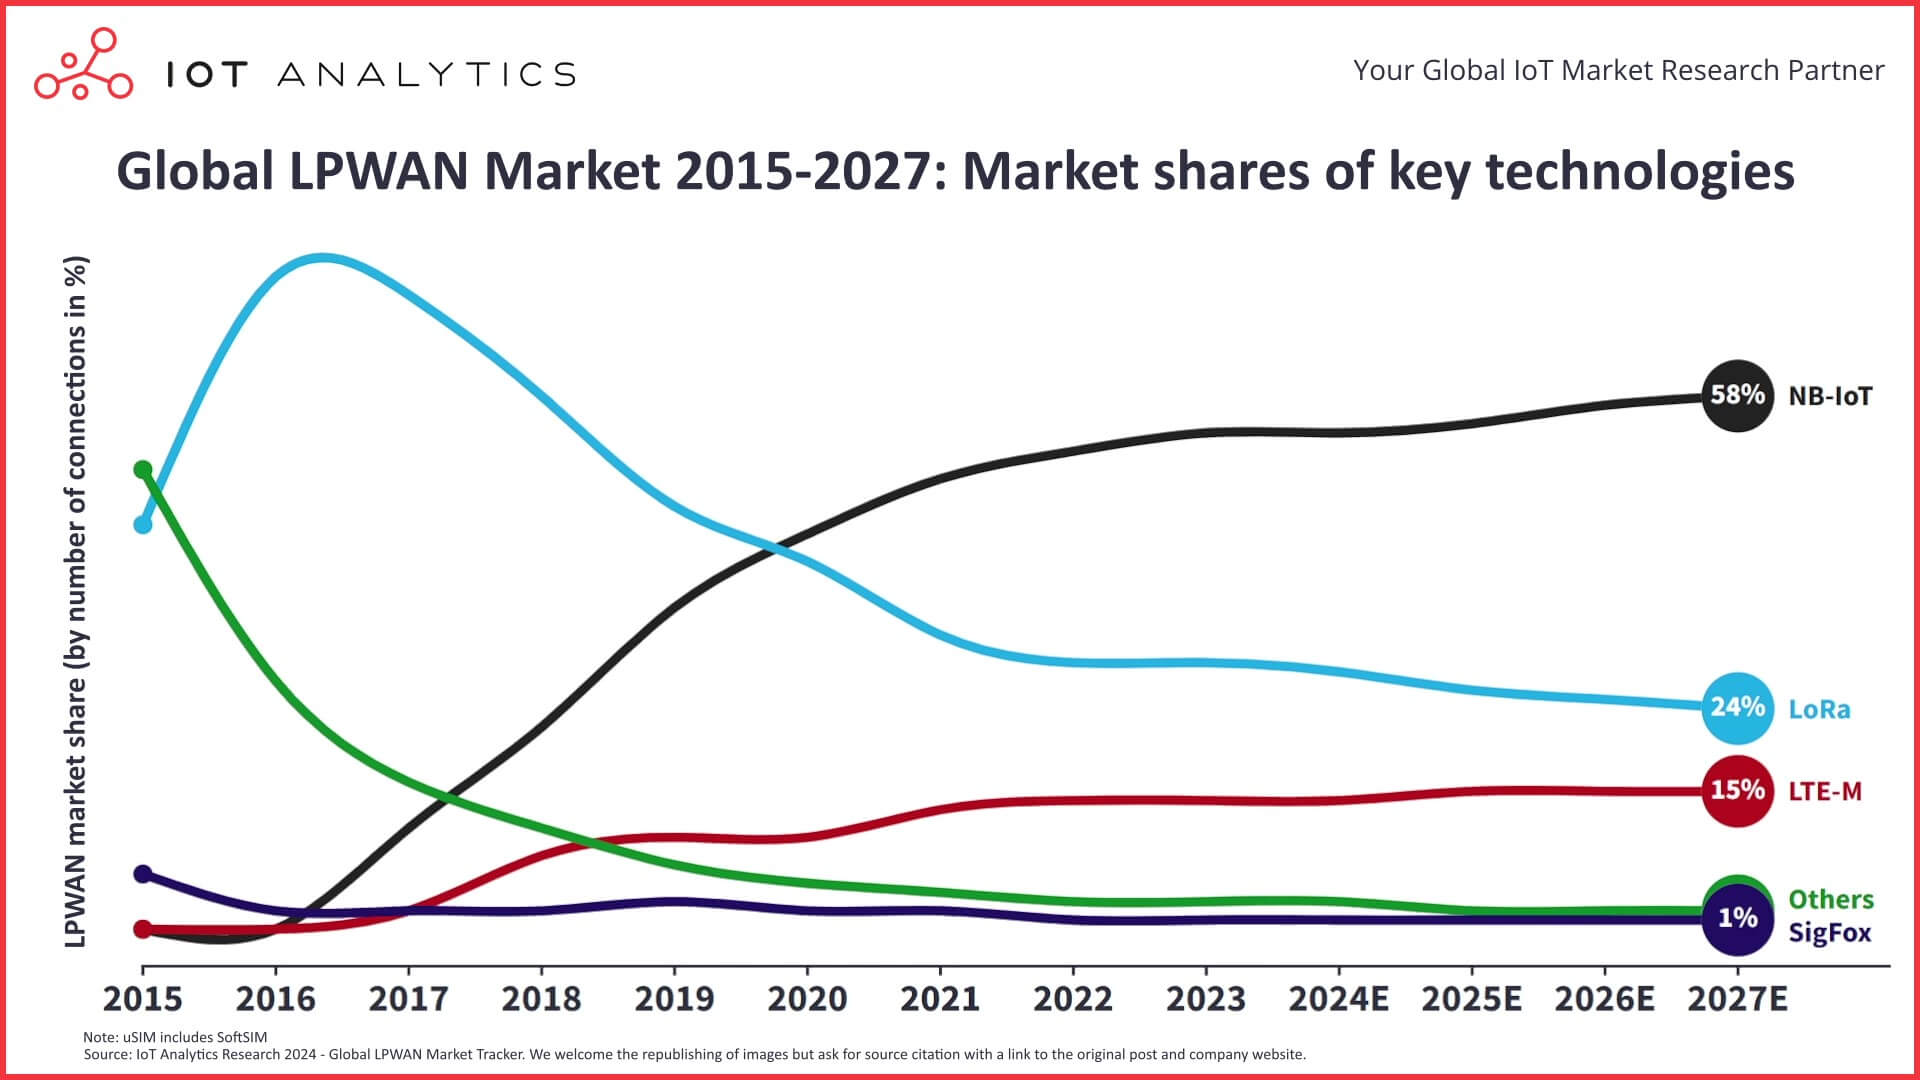 graphic: Global LPWAN market 2015-2027: Market shares of key technologies